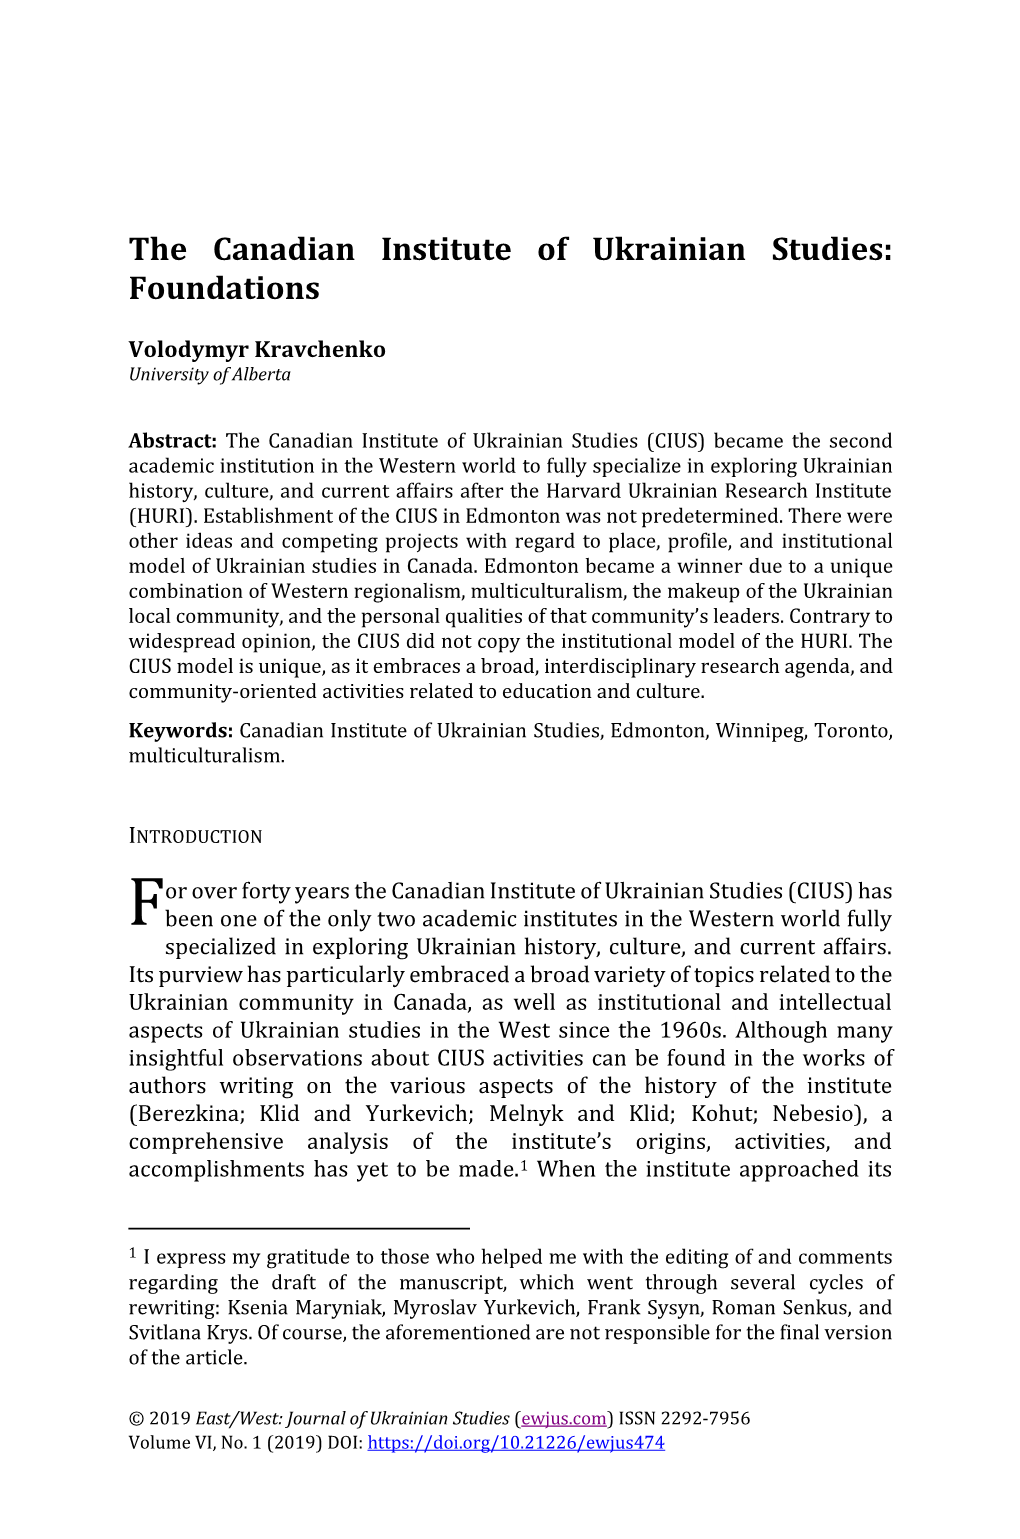 The Canadian Institute of Ukrainian Studies: Foundations, EWJUS, Vol